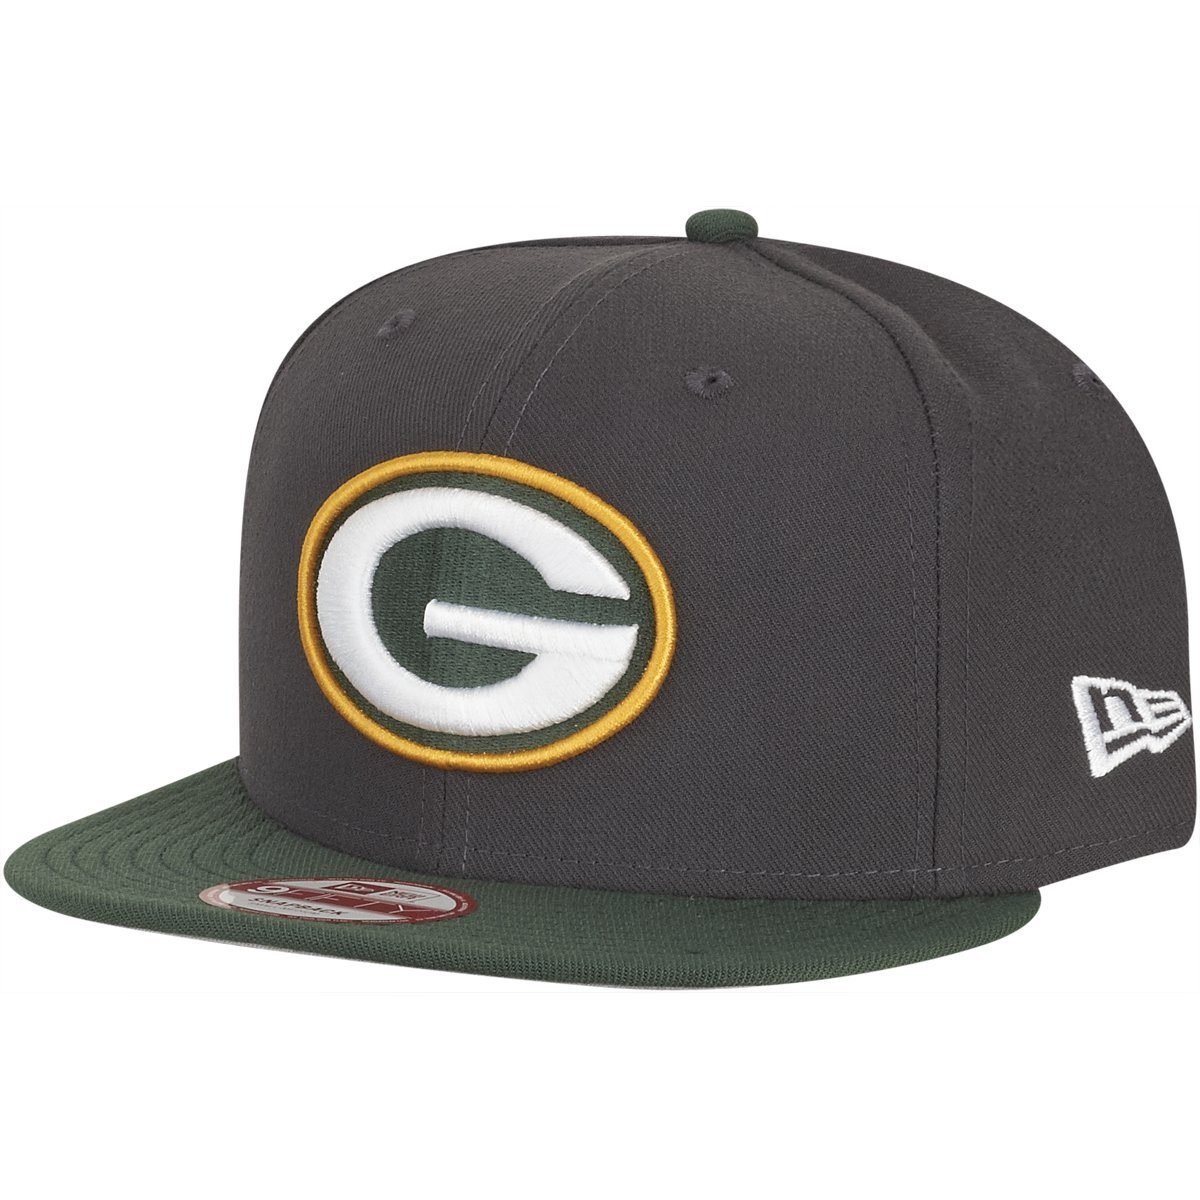 Herren Caps New Era Snapback Cap 9Fifty NFL Green Bay Packers